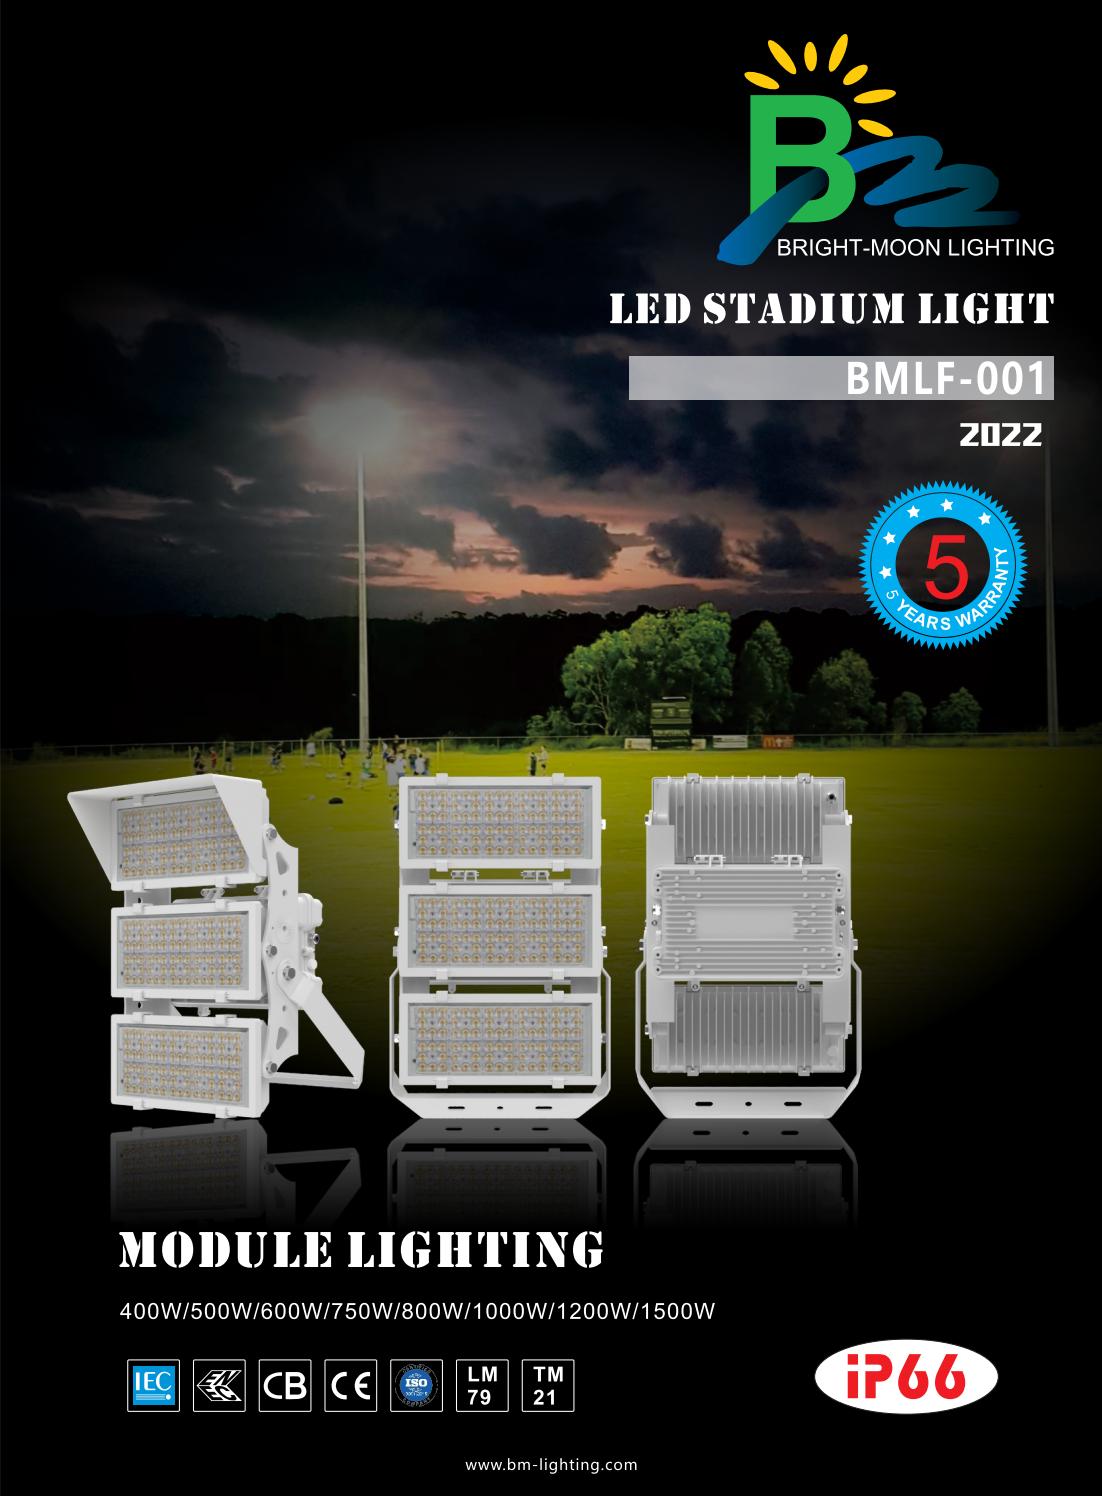 Bright-moon LED Stadium Light Datasheet 2022_00.jpg